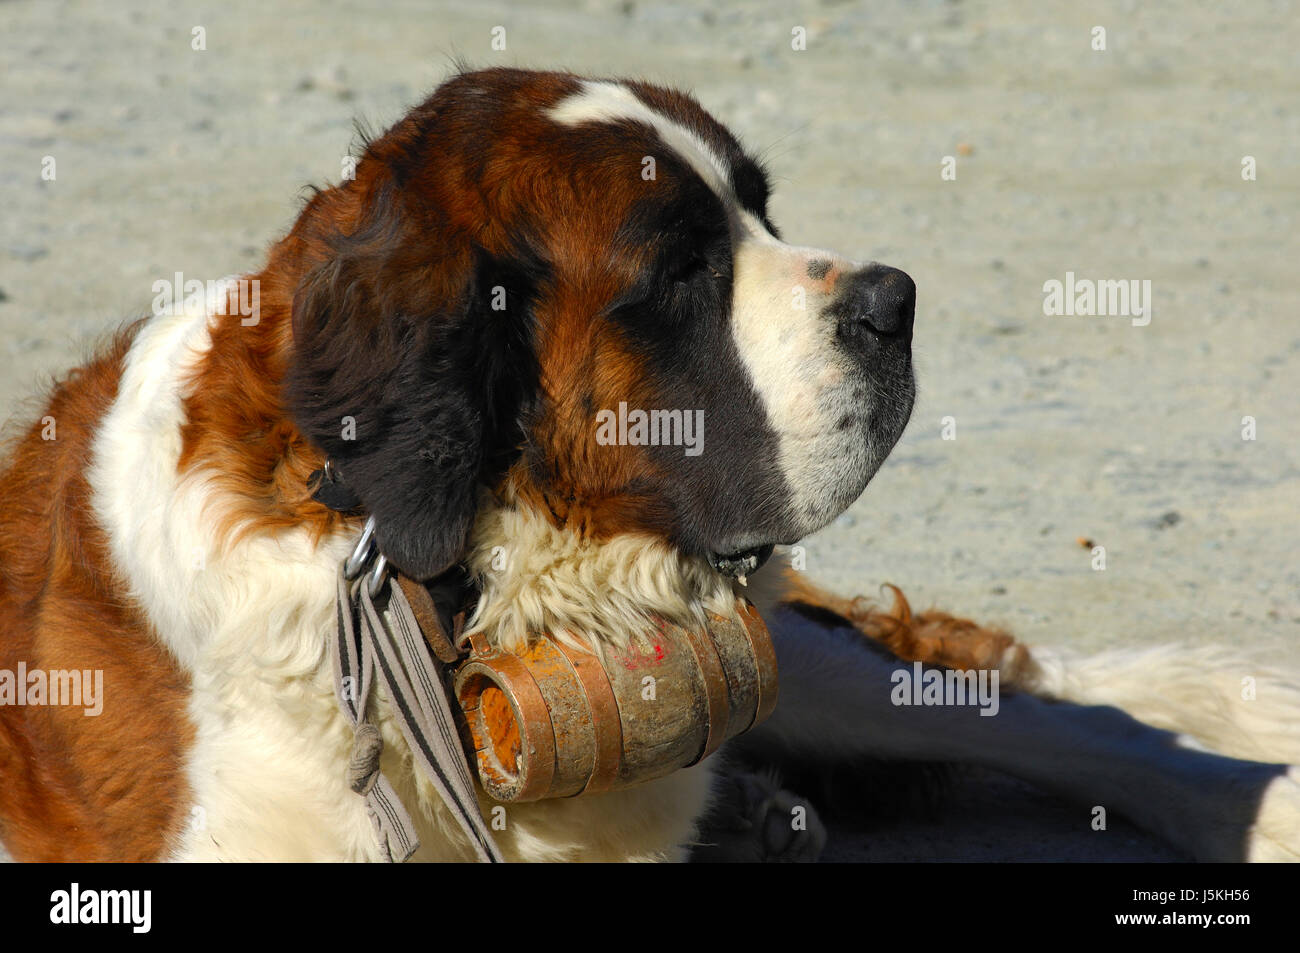 Dog bernhardiner barrel swiss hi-res stock photography and images - Alamy